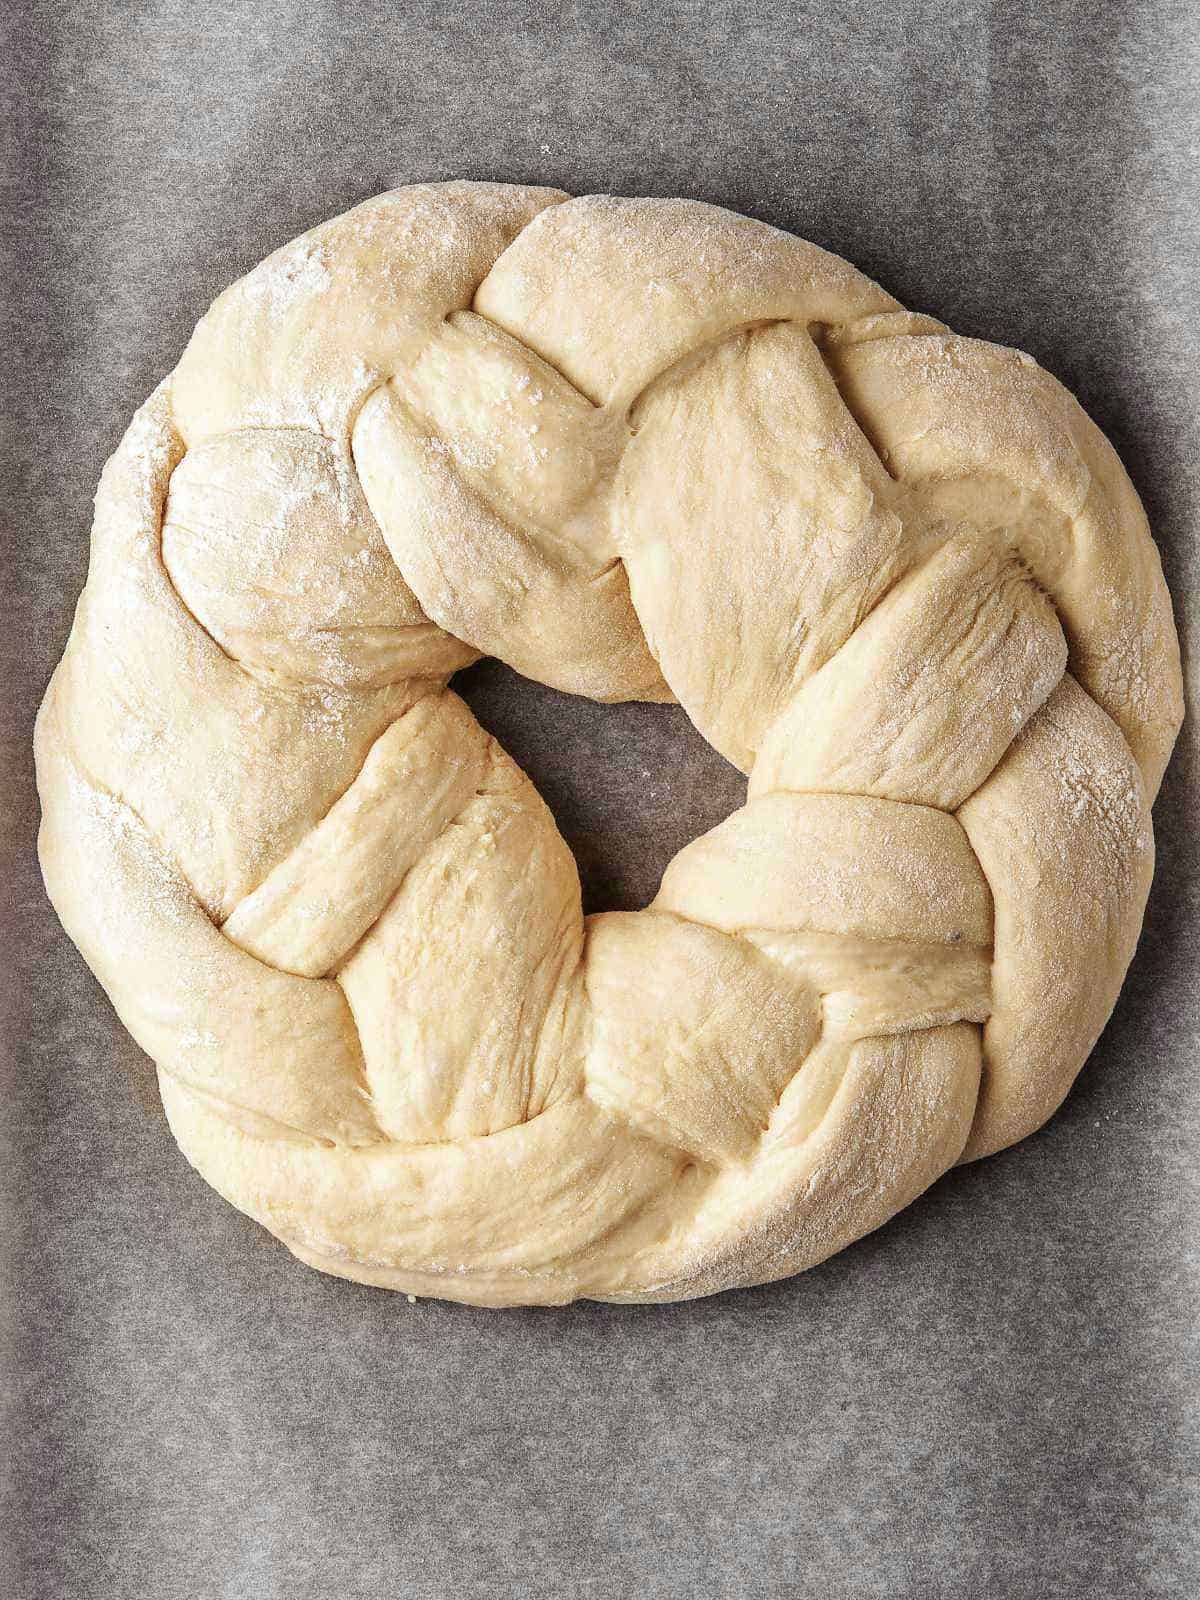 Dough braided into a wreath for a Greek Tsoureki Easter Bread.